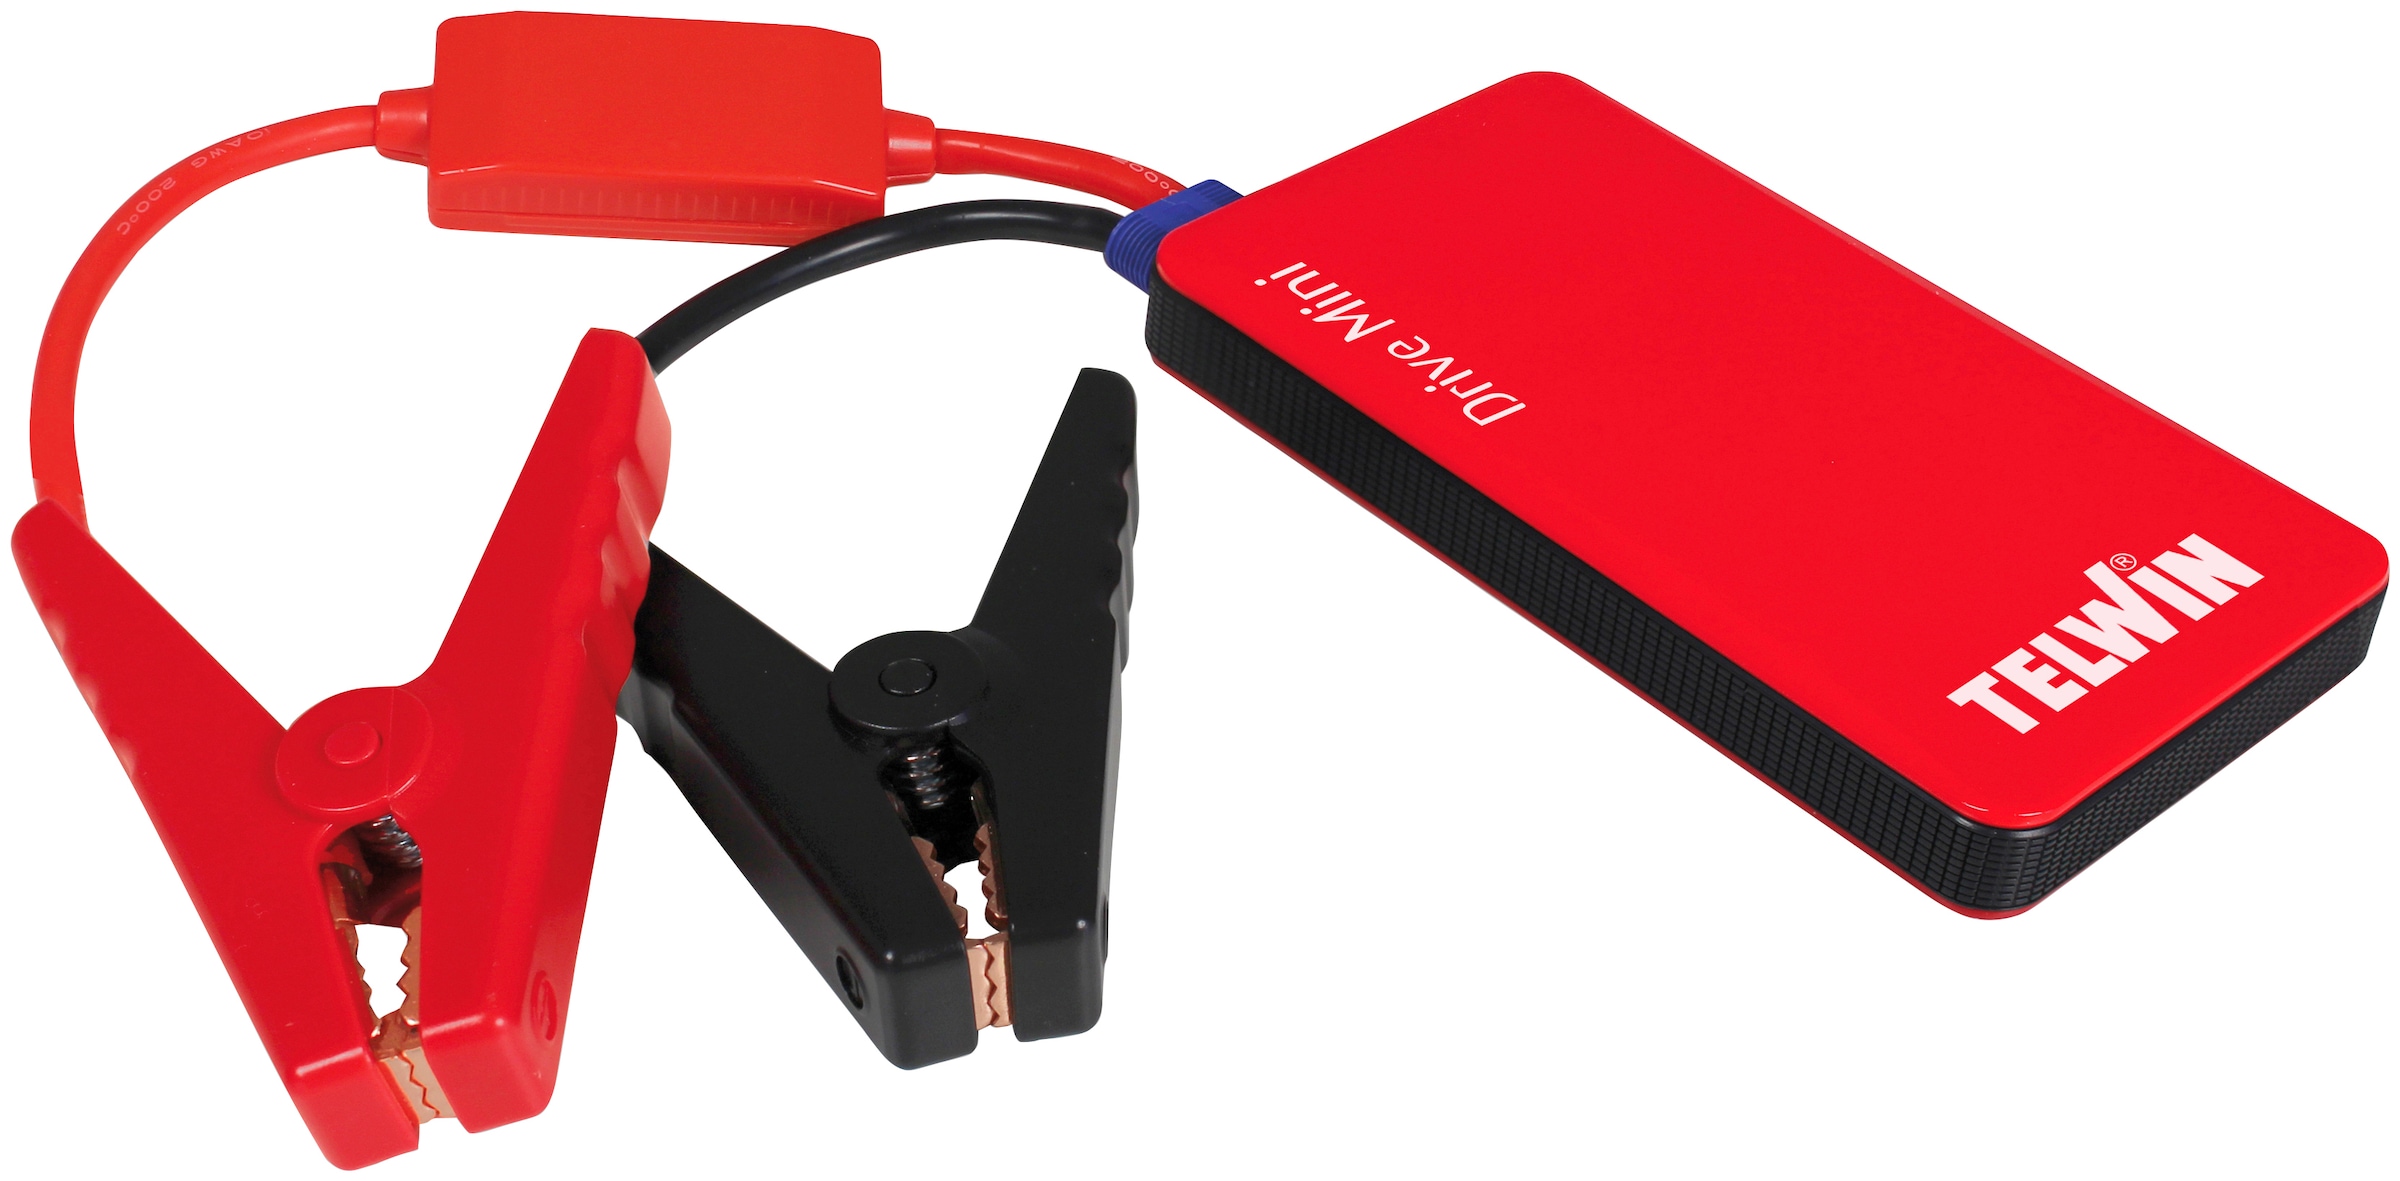 Black Friday TELWIN Autobatterie-Ladegerät »Drive Mini«, 6500 mA, 12 V,  inkl. Multifunktionsstarter & Powerbank | BAUR